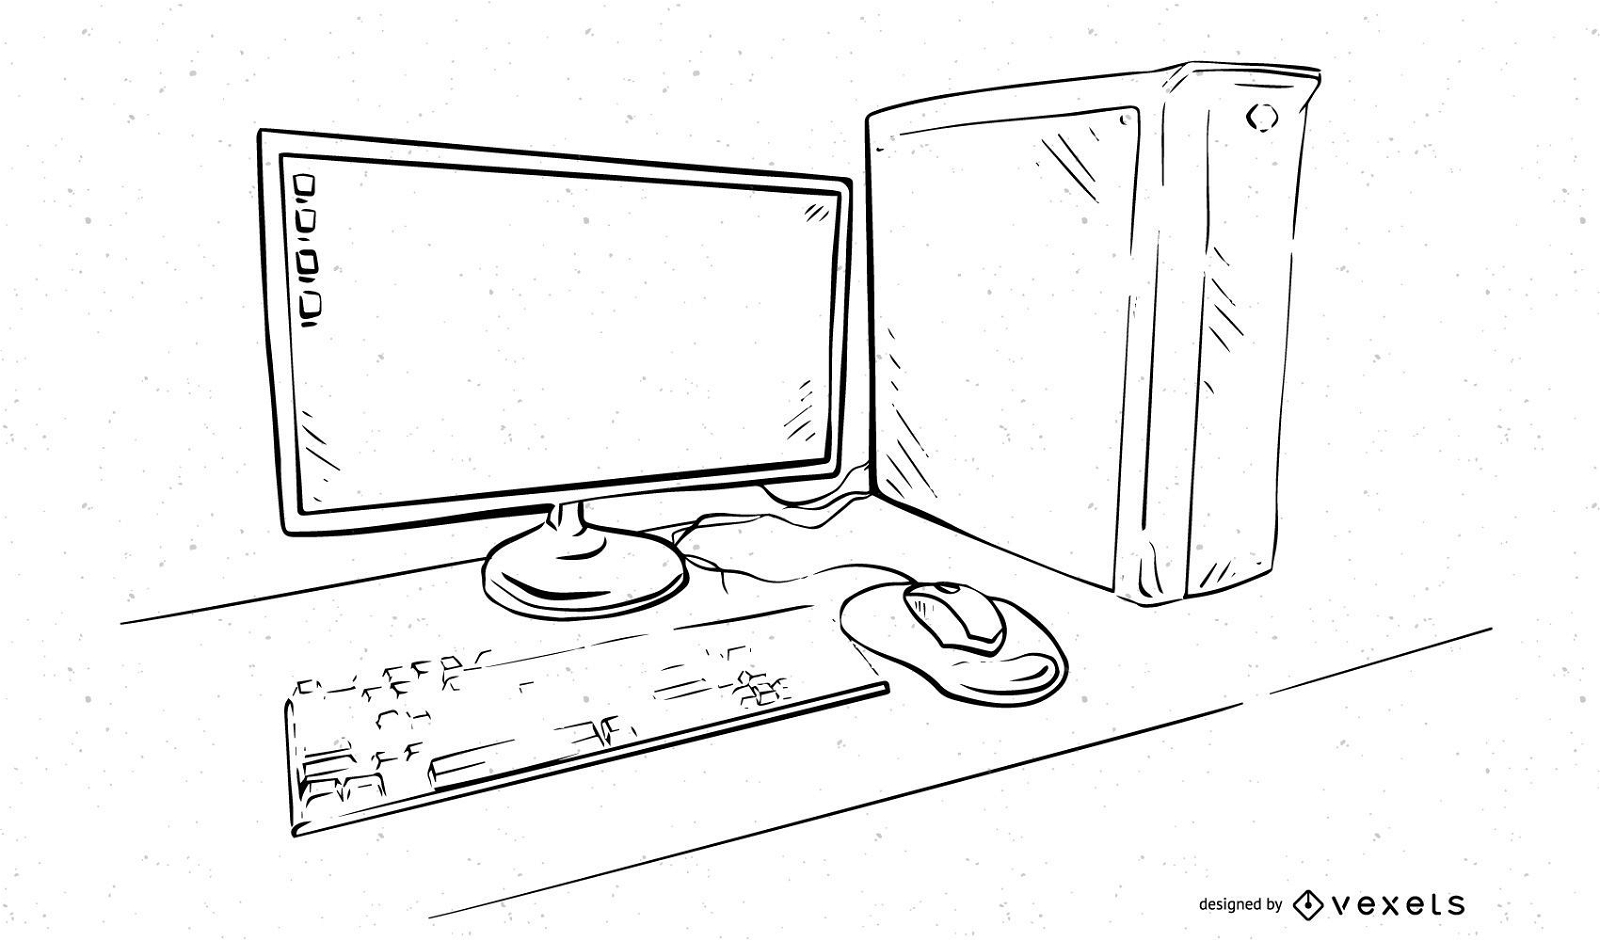 PC desktop preto e branco com contorno